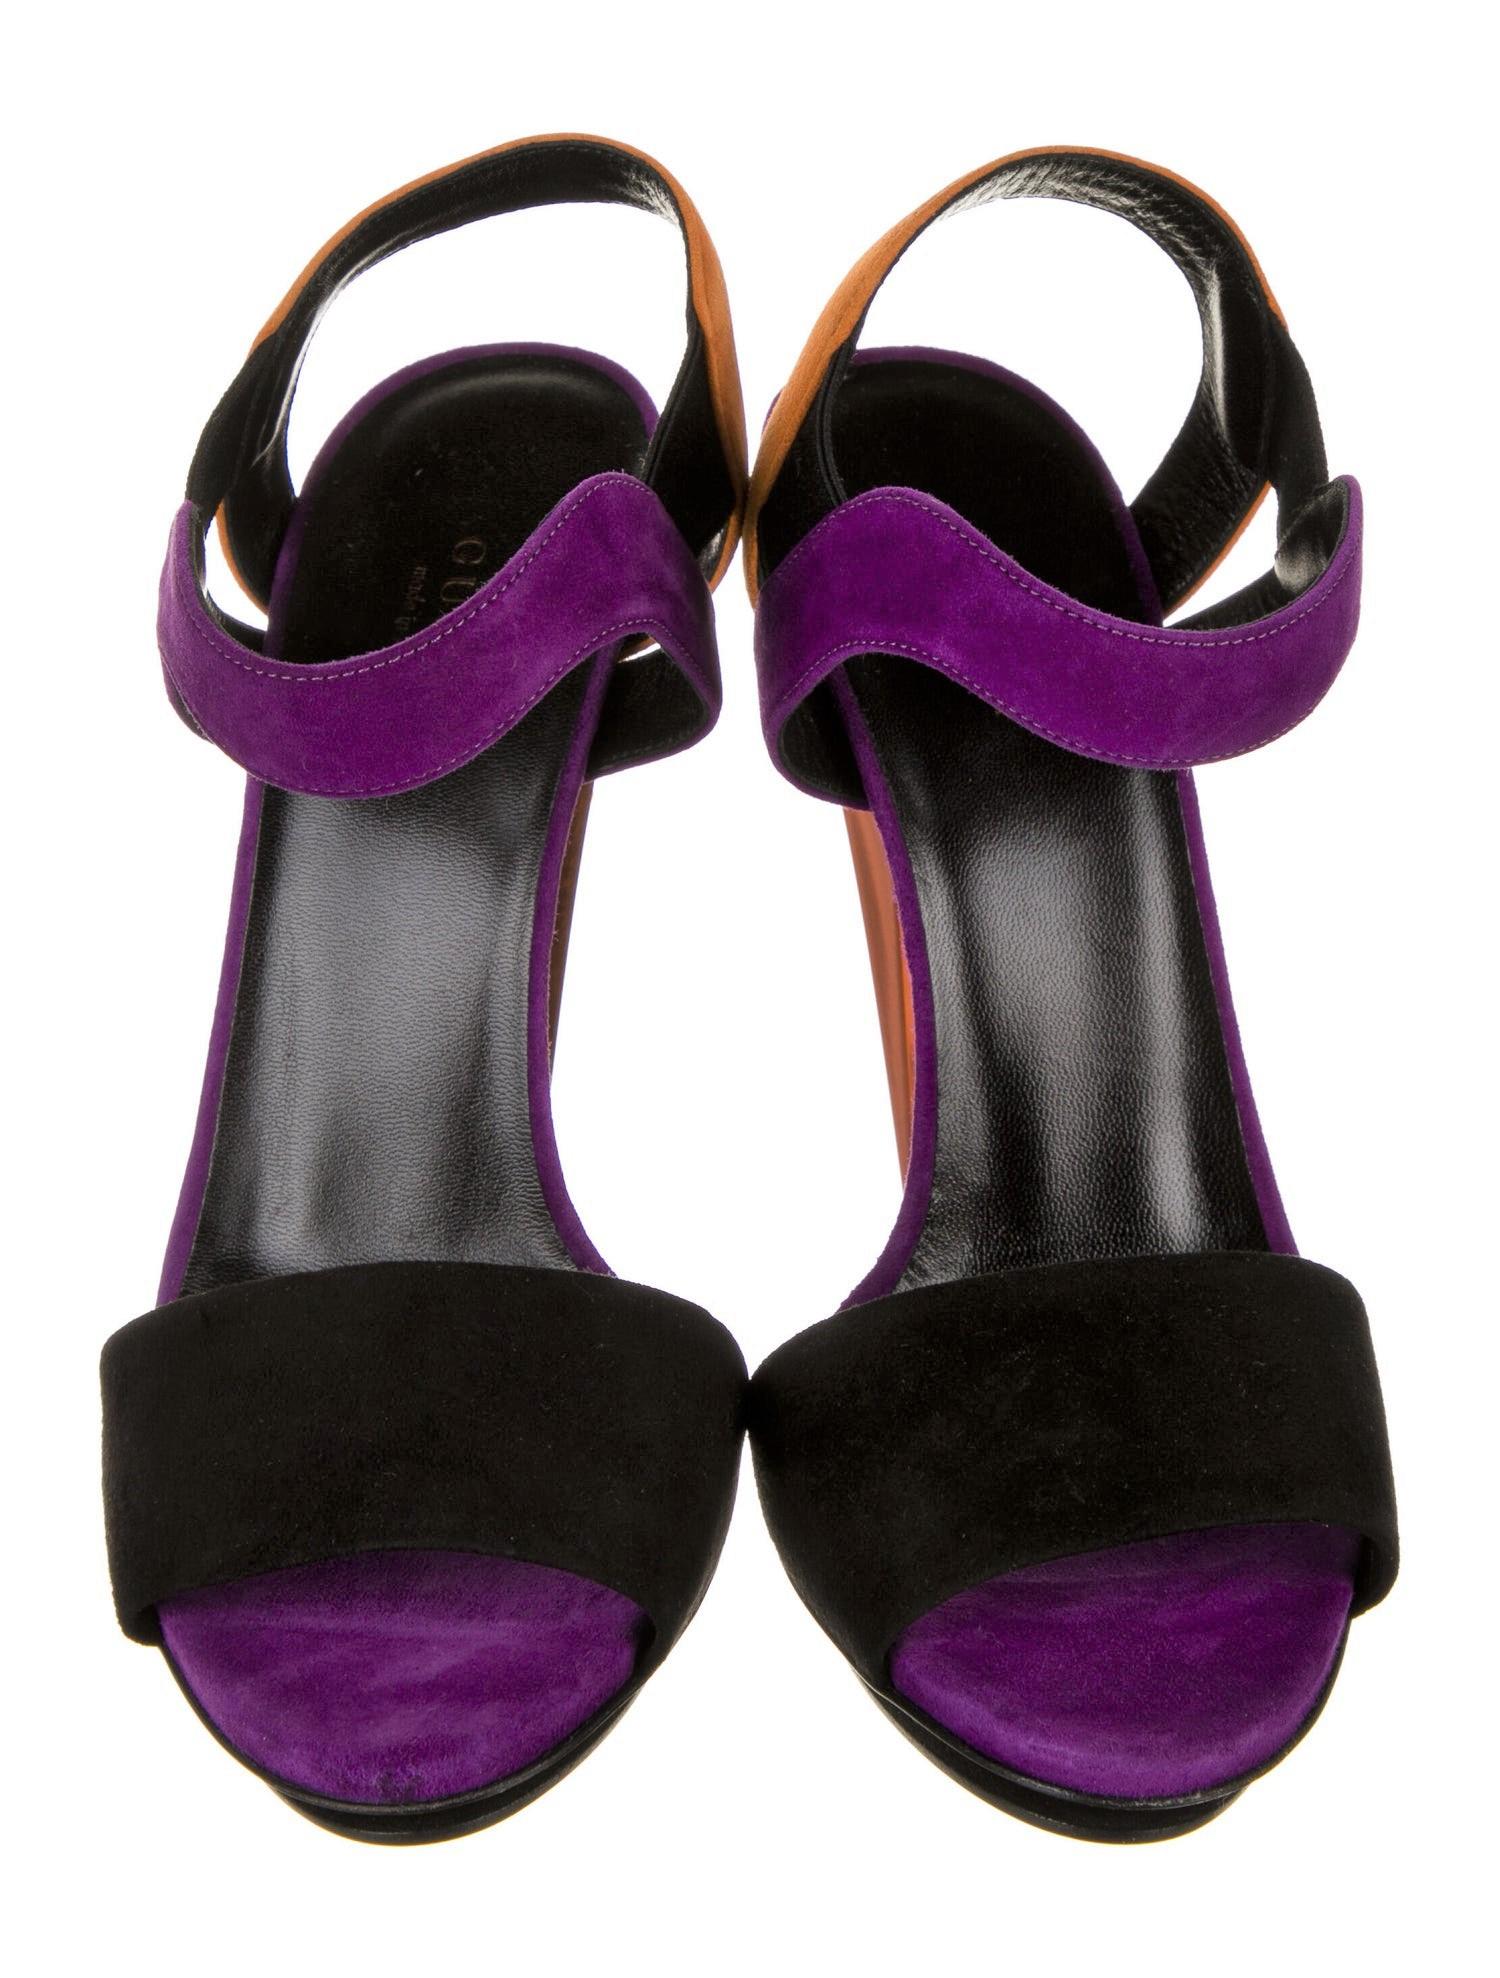 New Gucci Ad Runway 2014 Purple Orange Suede Mirrored Pump Heels Sz 38 ...